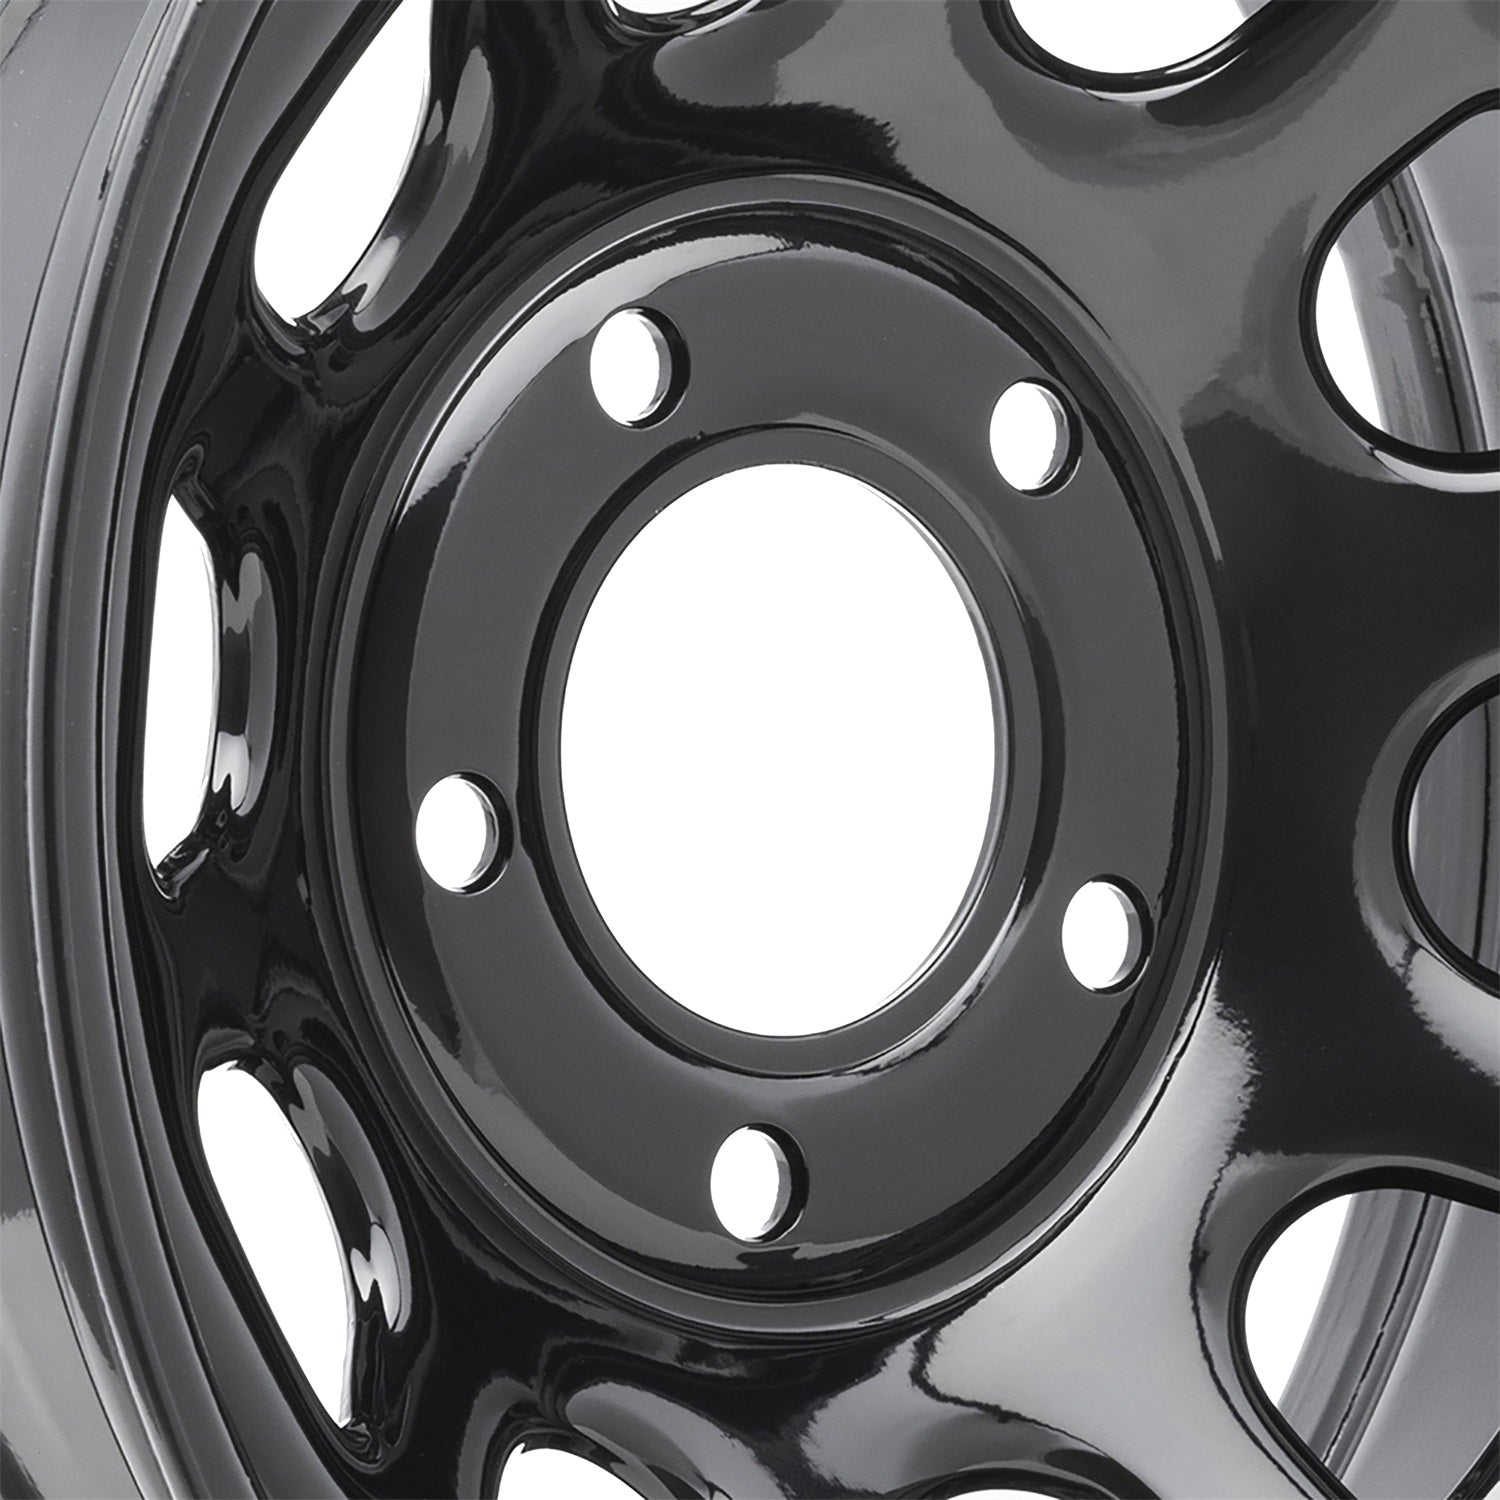 Pro Comp Wheels 51-5185 Rock Crawler Series 51 Black Wheel